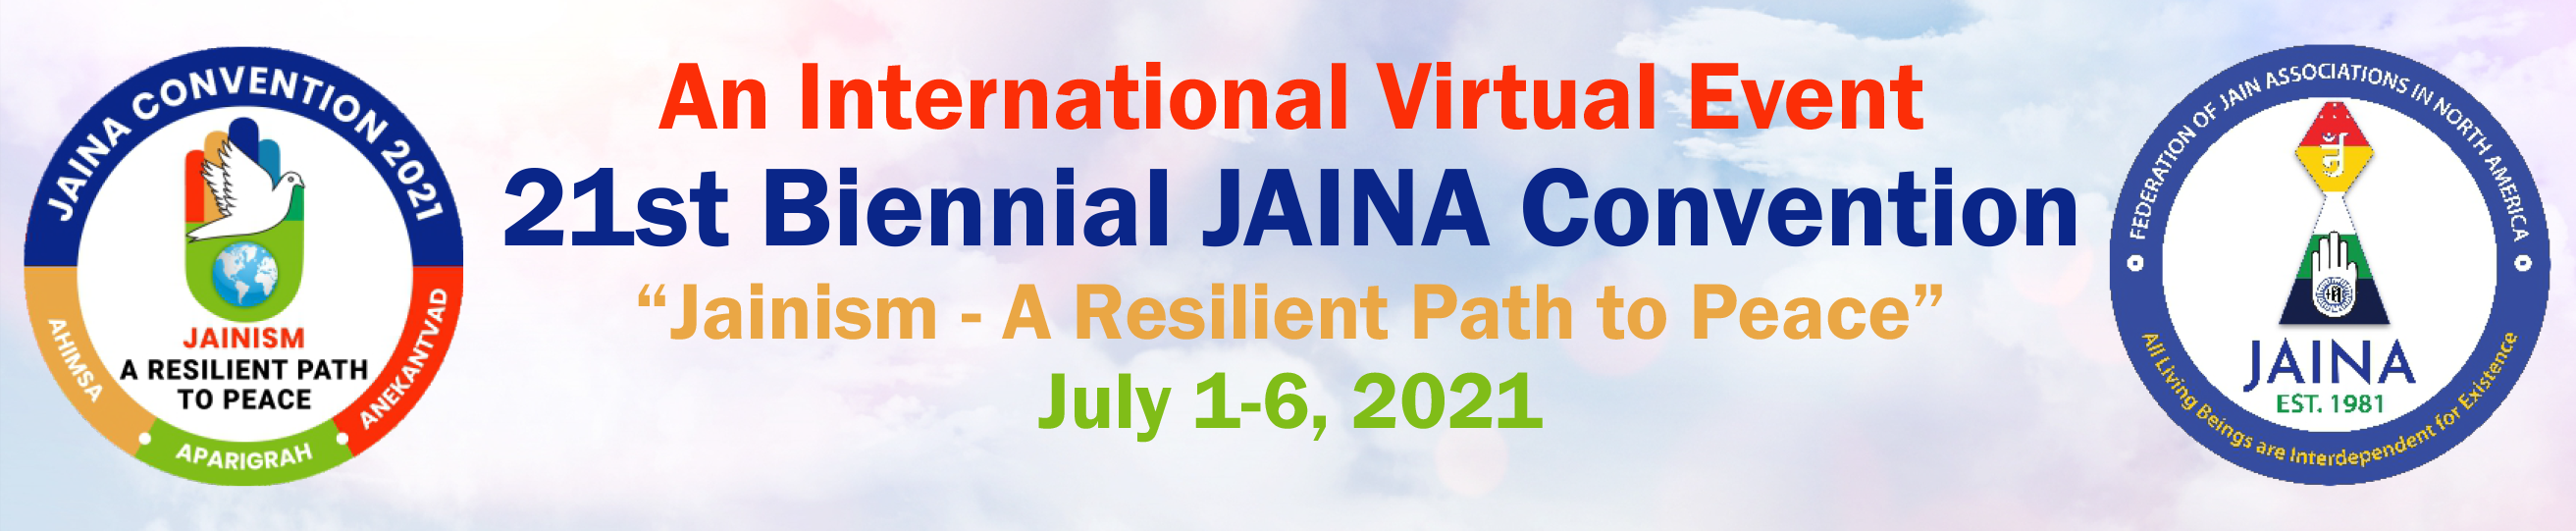 JAINA Newsletter JAINA Convention 2021 Registration Opens, Worldwide